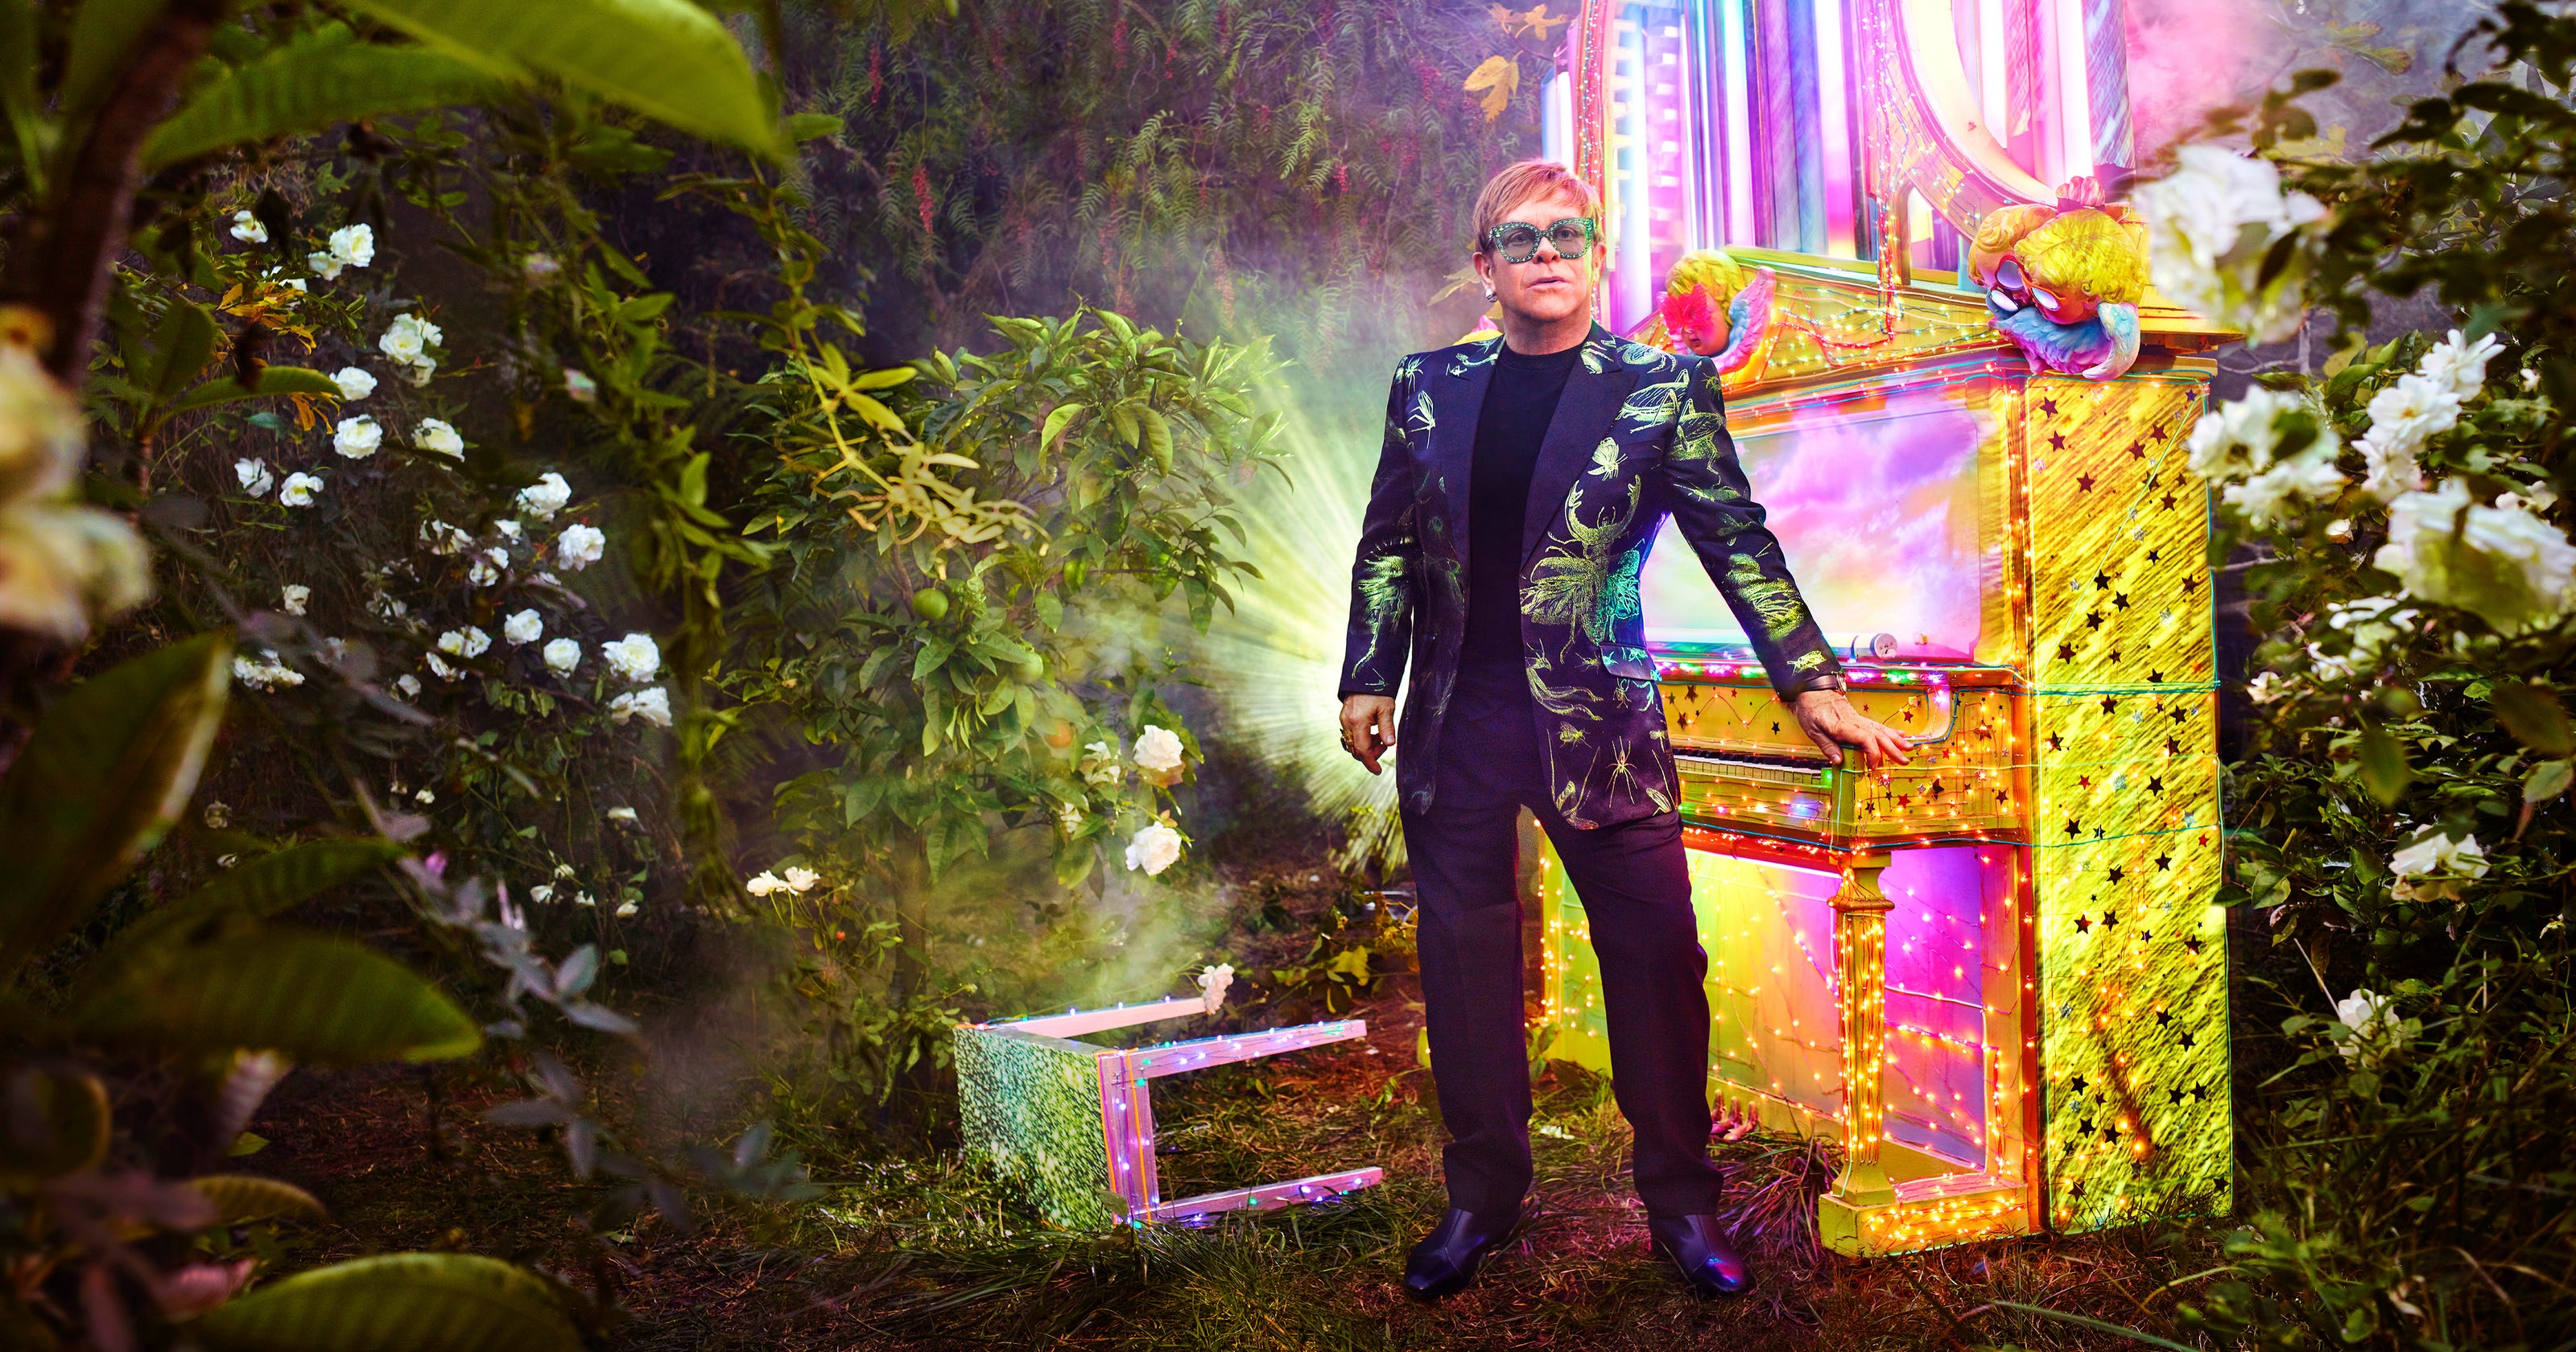 Elton John's final tour, Farewell Yellow Brick Road comes to Phoenix, 20193200 x 1680